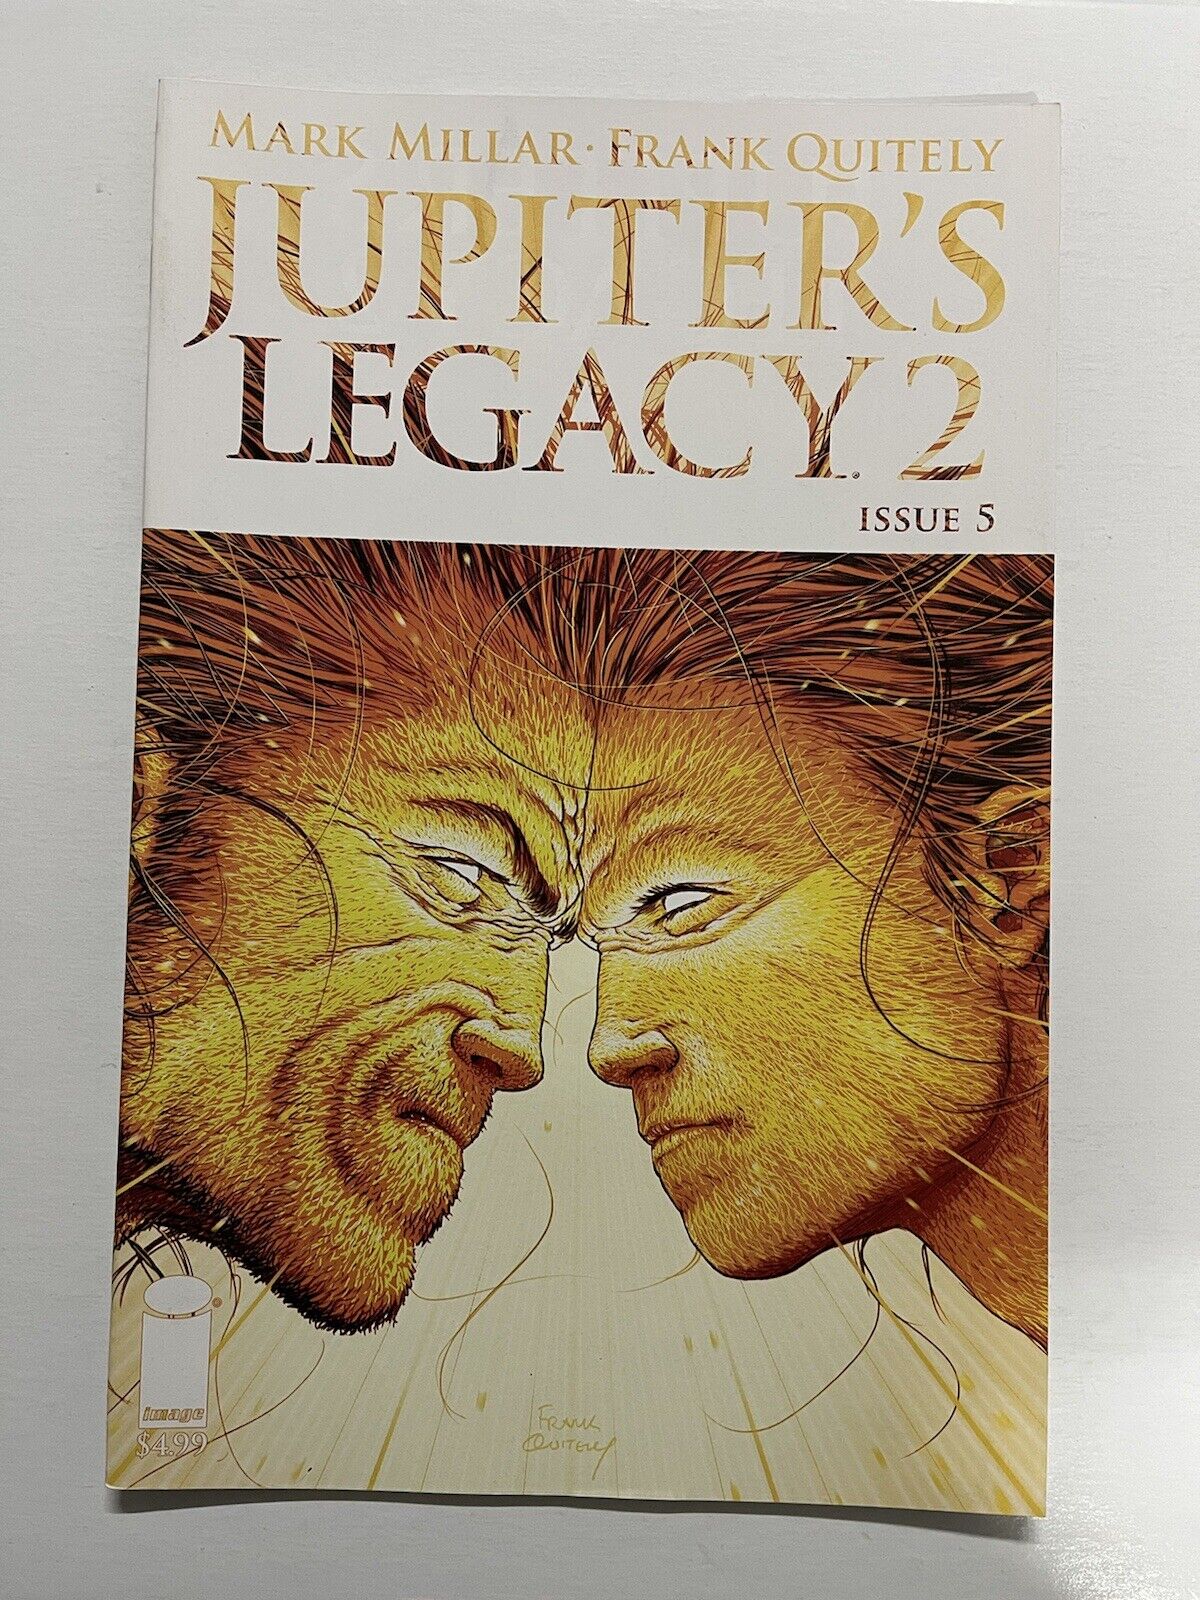 Jupiter's Legacy 2 #5 - Image Comics NM - Mark Millar Frank Quitely | Combined S